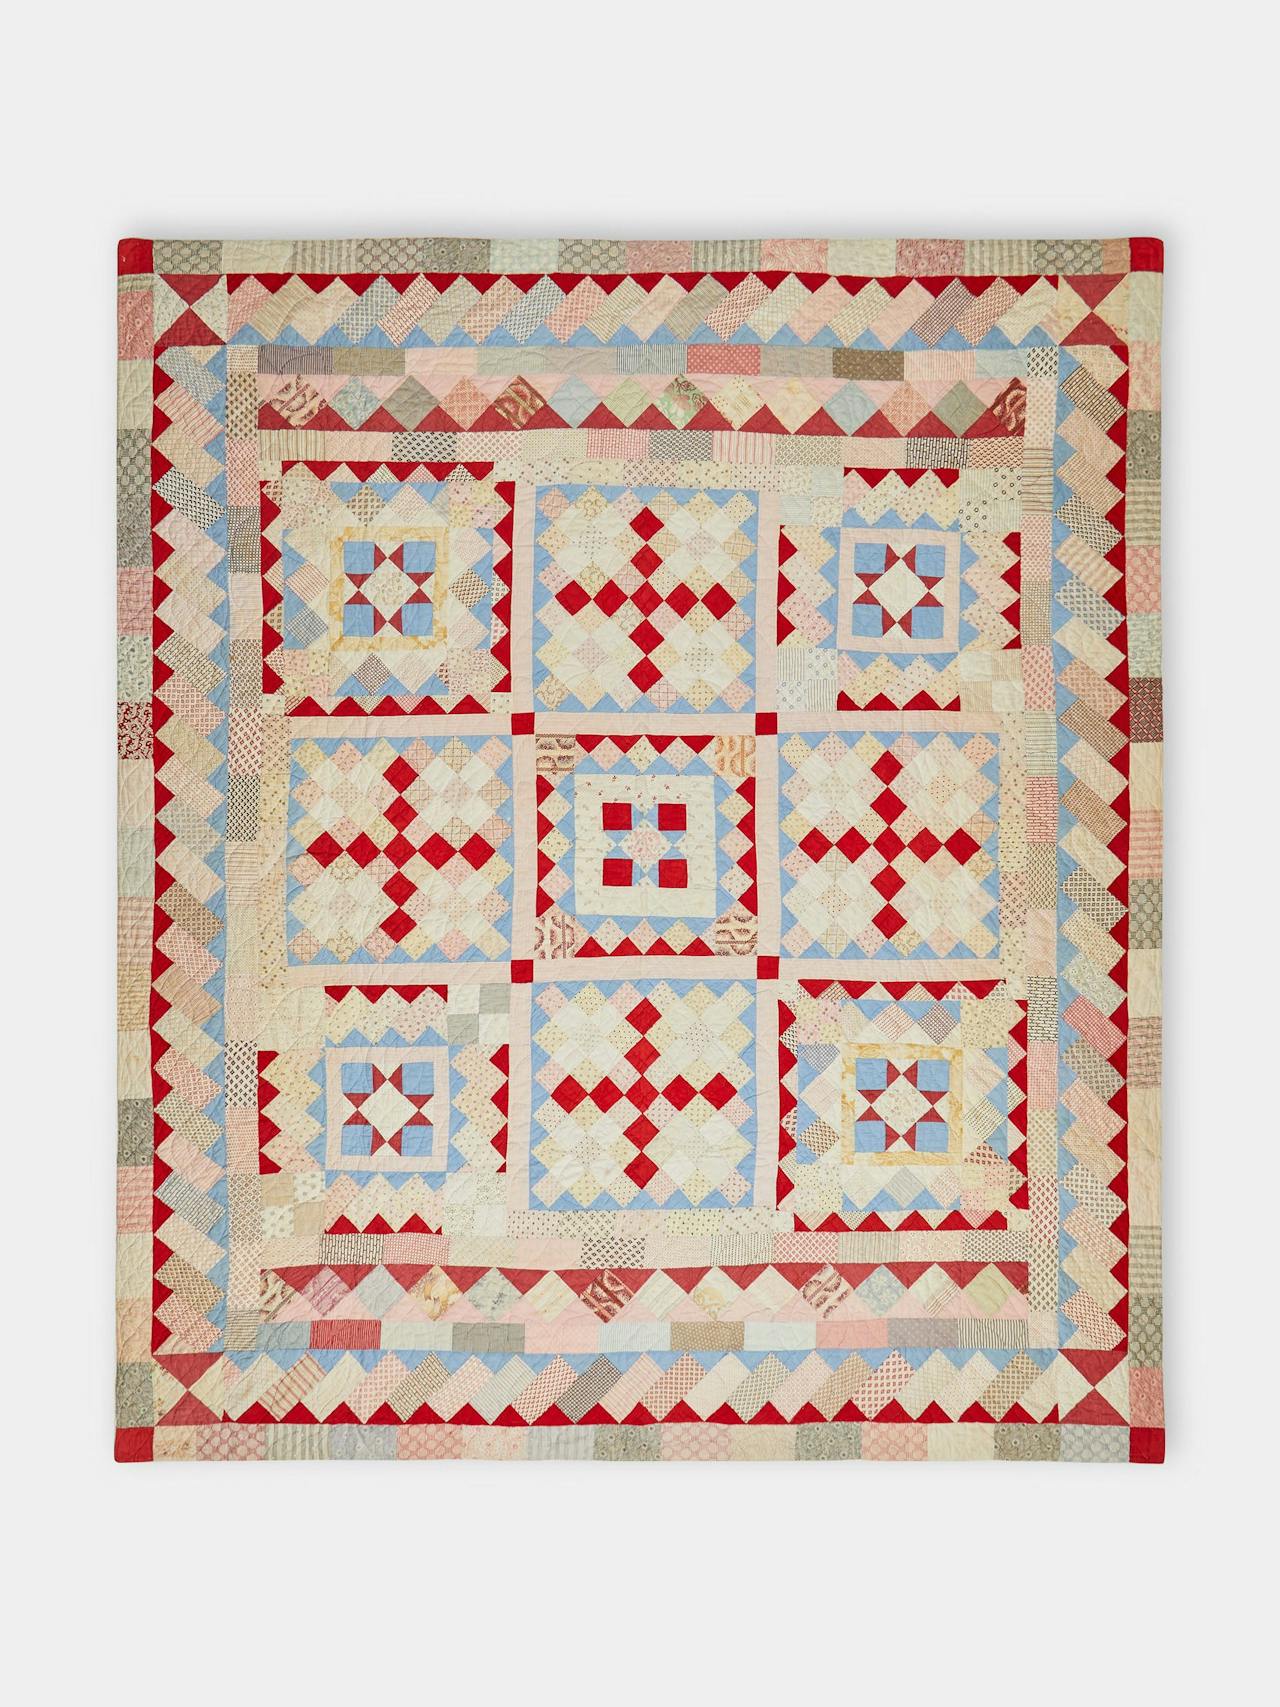 Victorian patchwork quilt